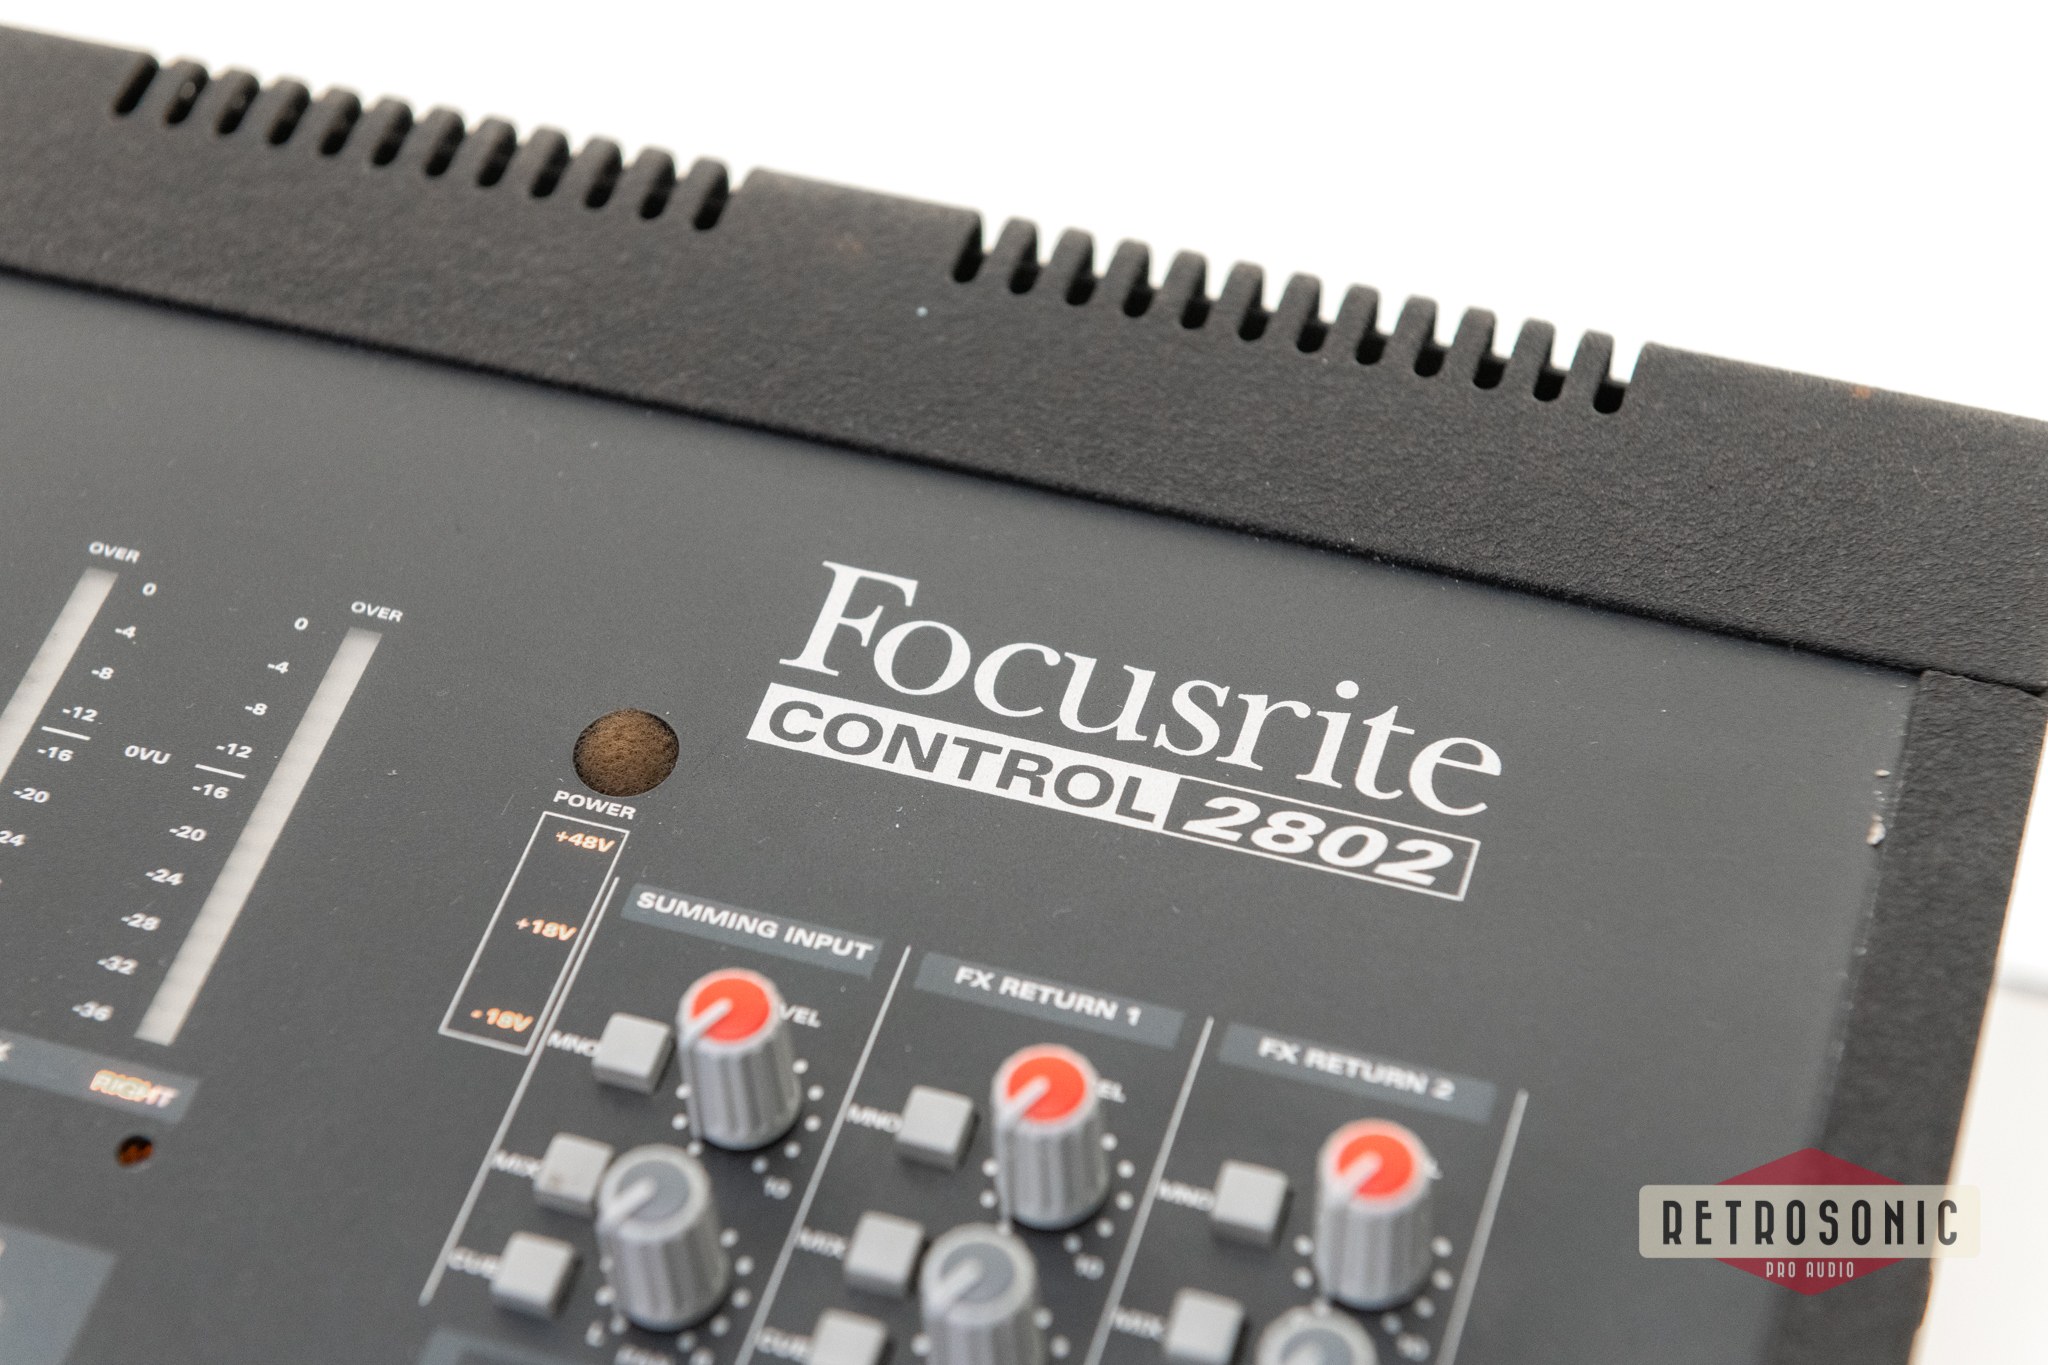 Focusrite Control 2802 Analogue Console & DAW Controller